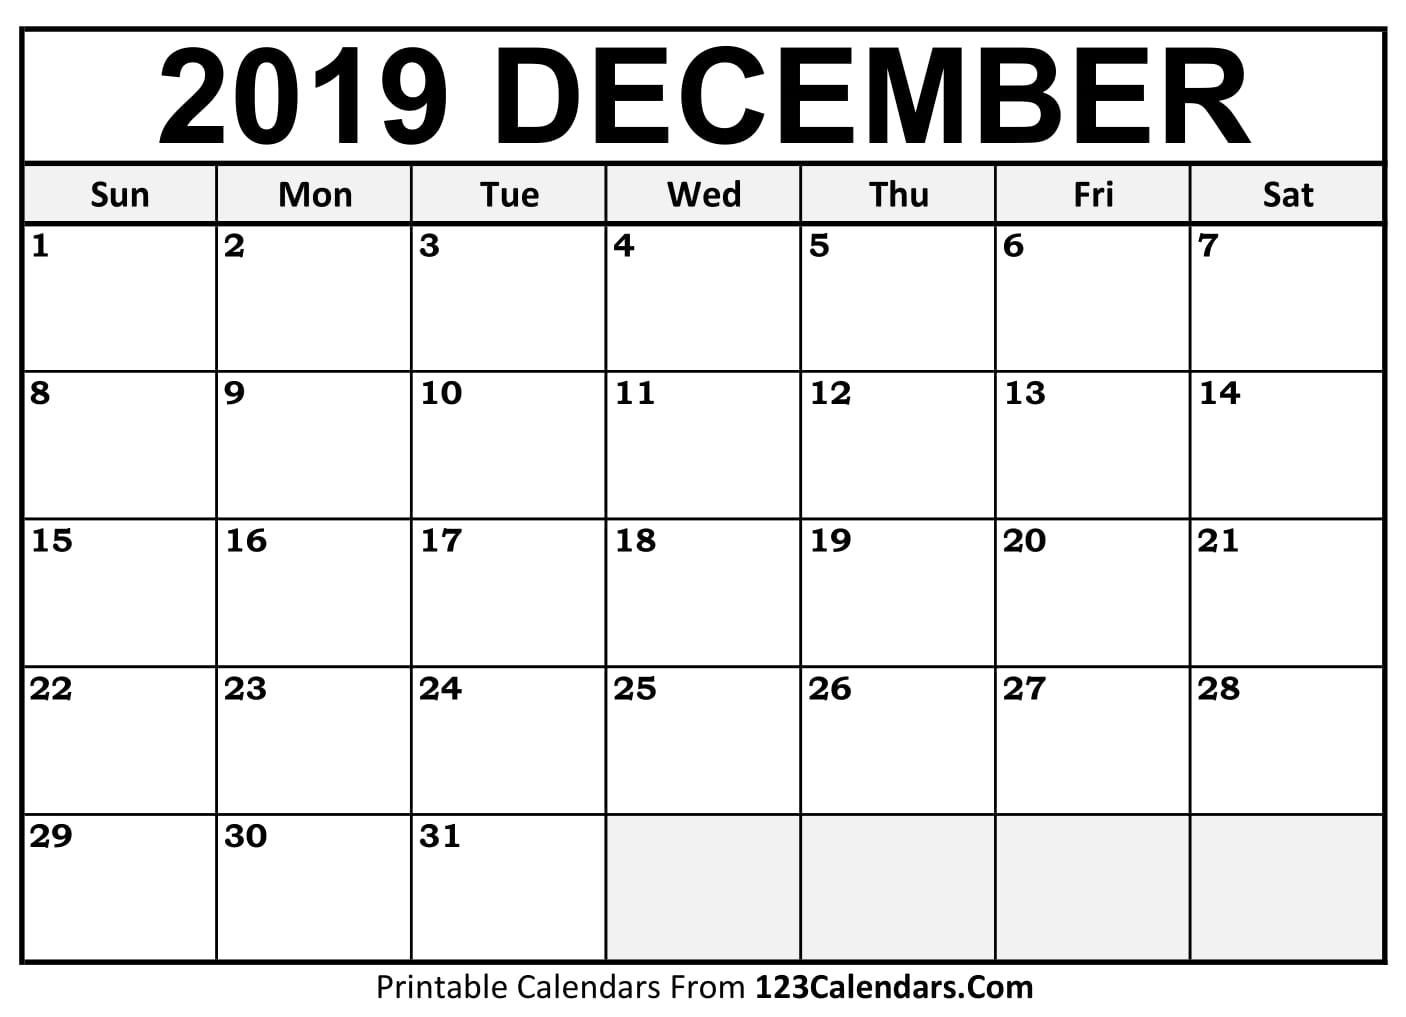 December 2019 Calendar (Blank) Easily Printable 123Calendars